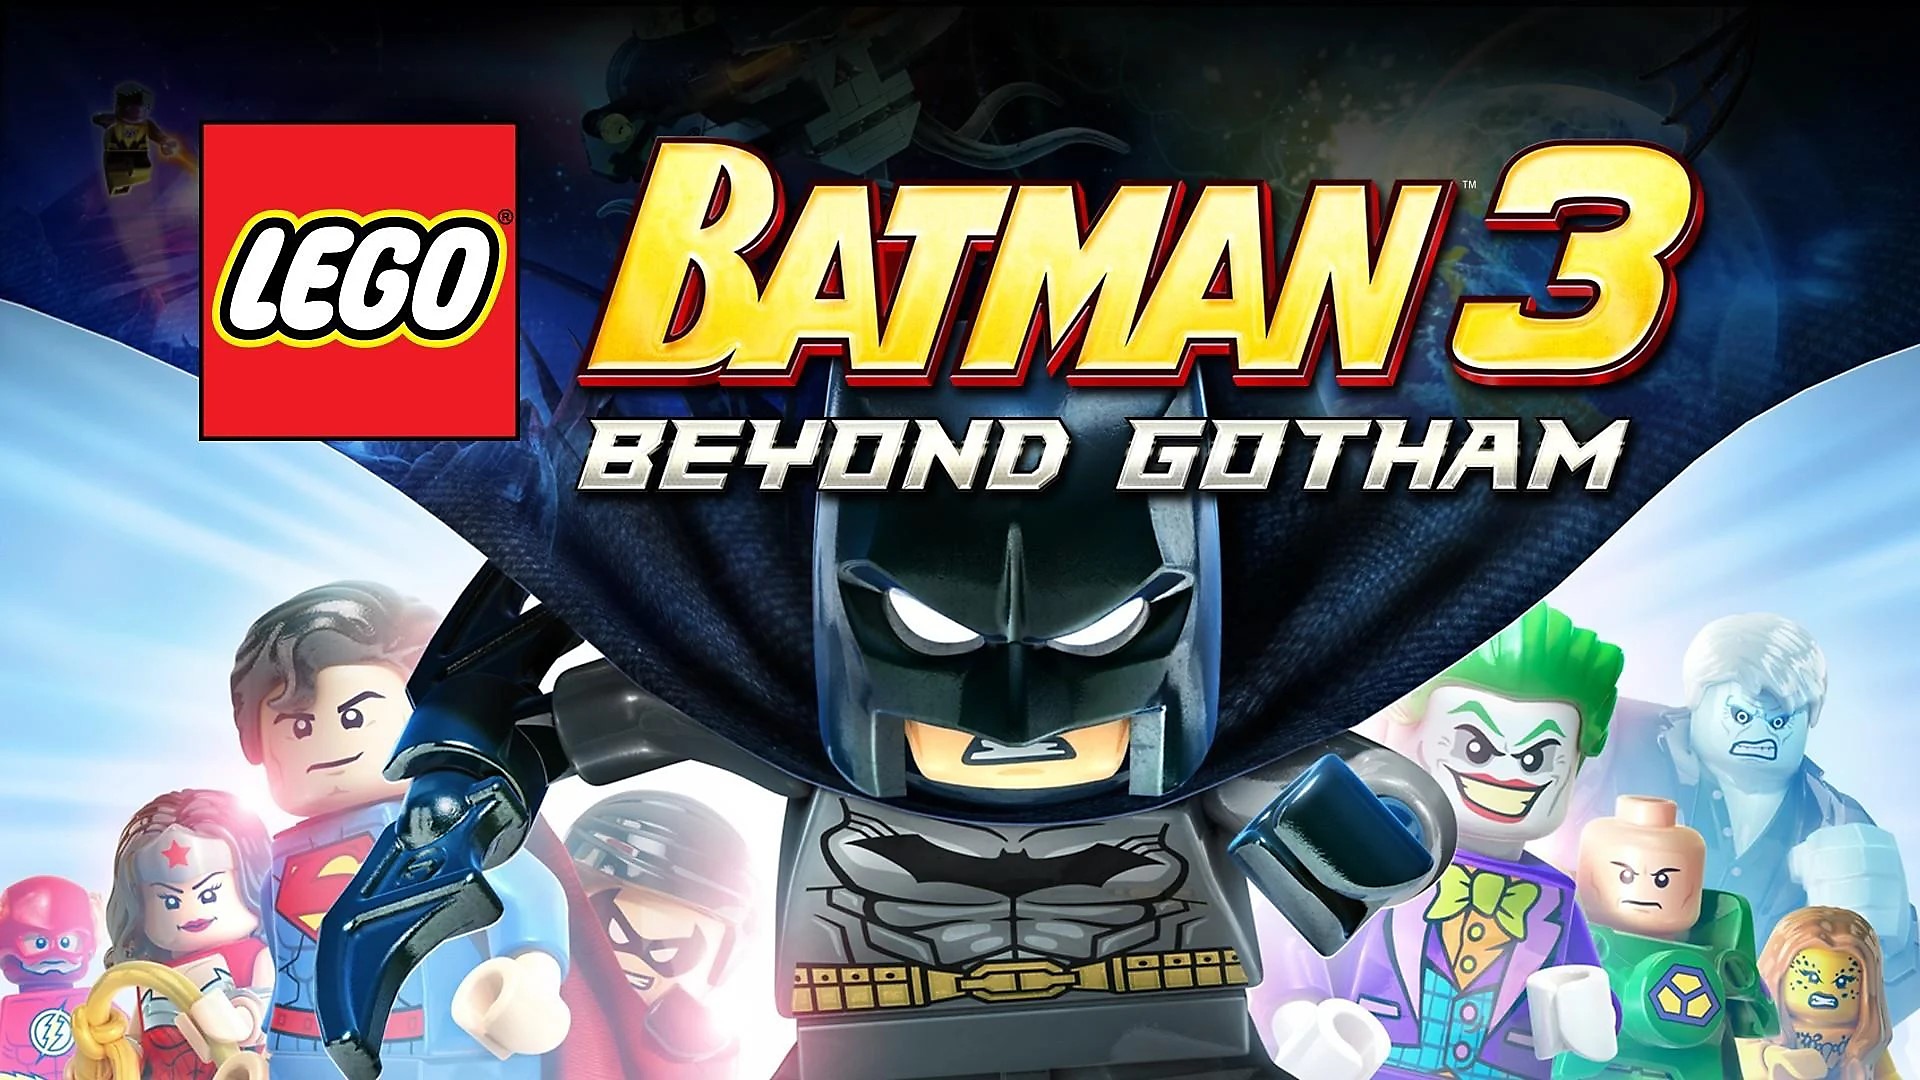 LEGO Batman 3: Beyond Gotham Trailer | E3 2014 | PS4, PS3 & PS Vita